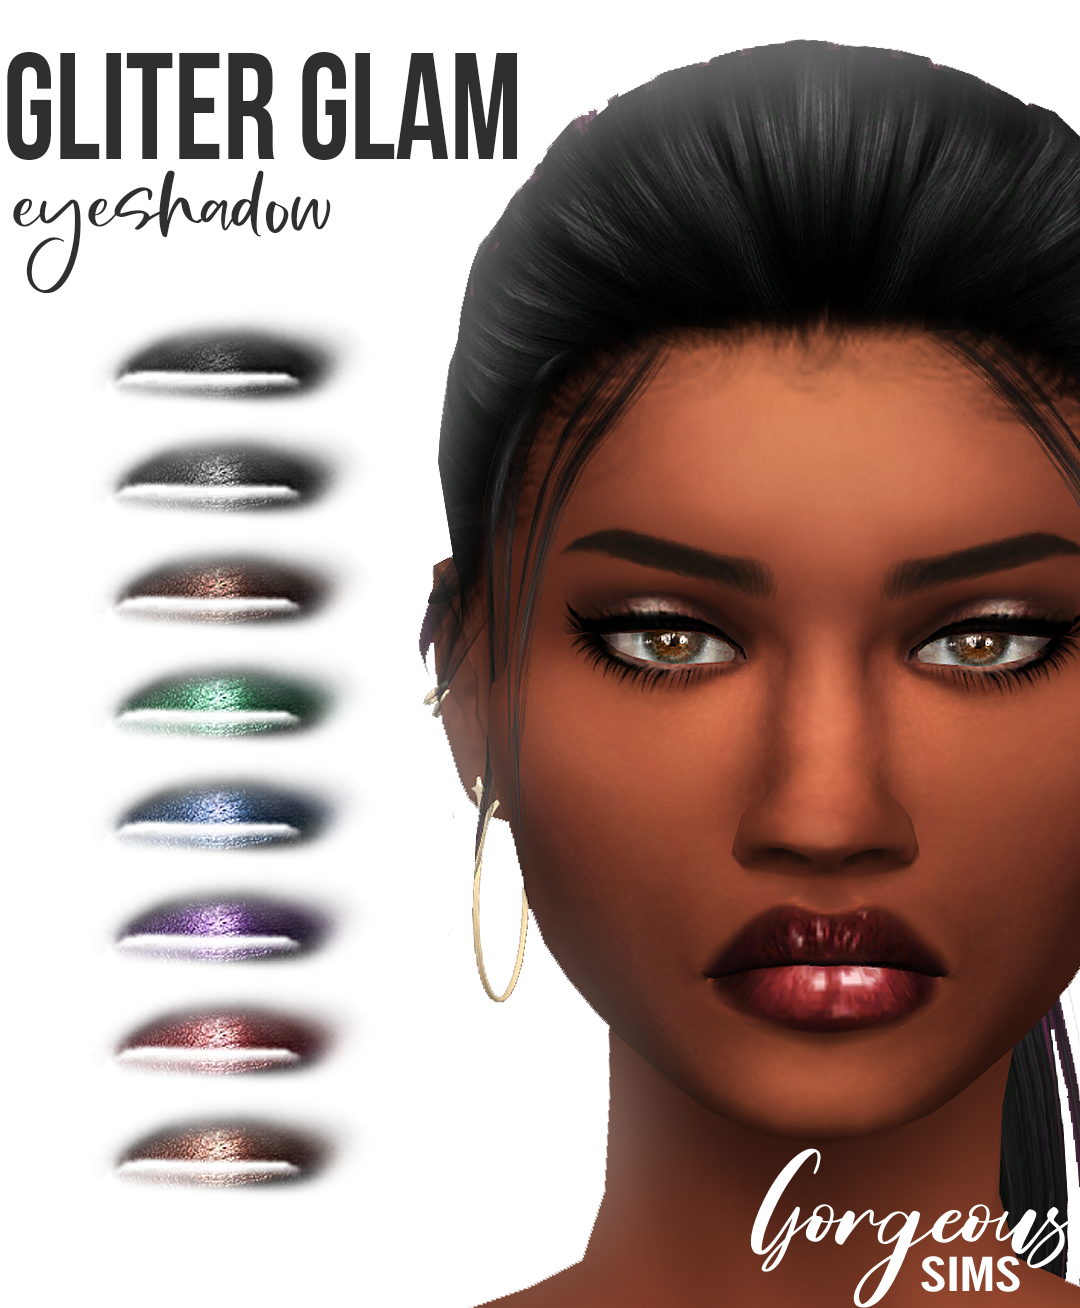 Glitter Glam eyeshadow